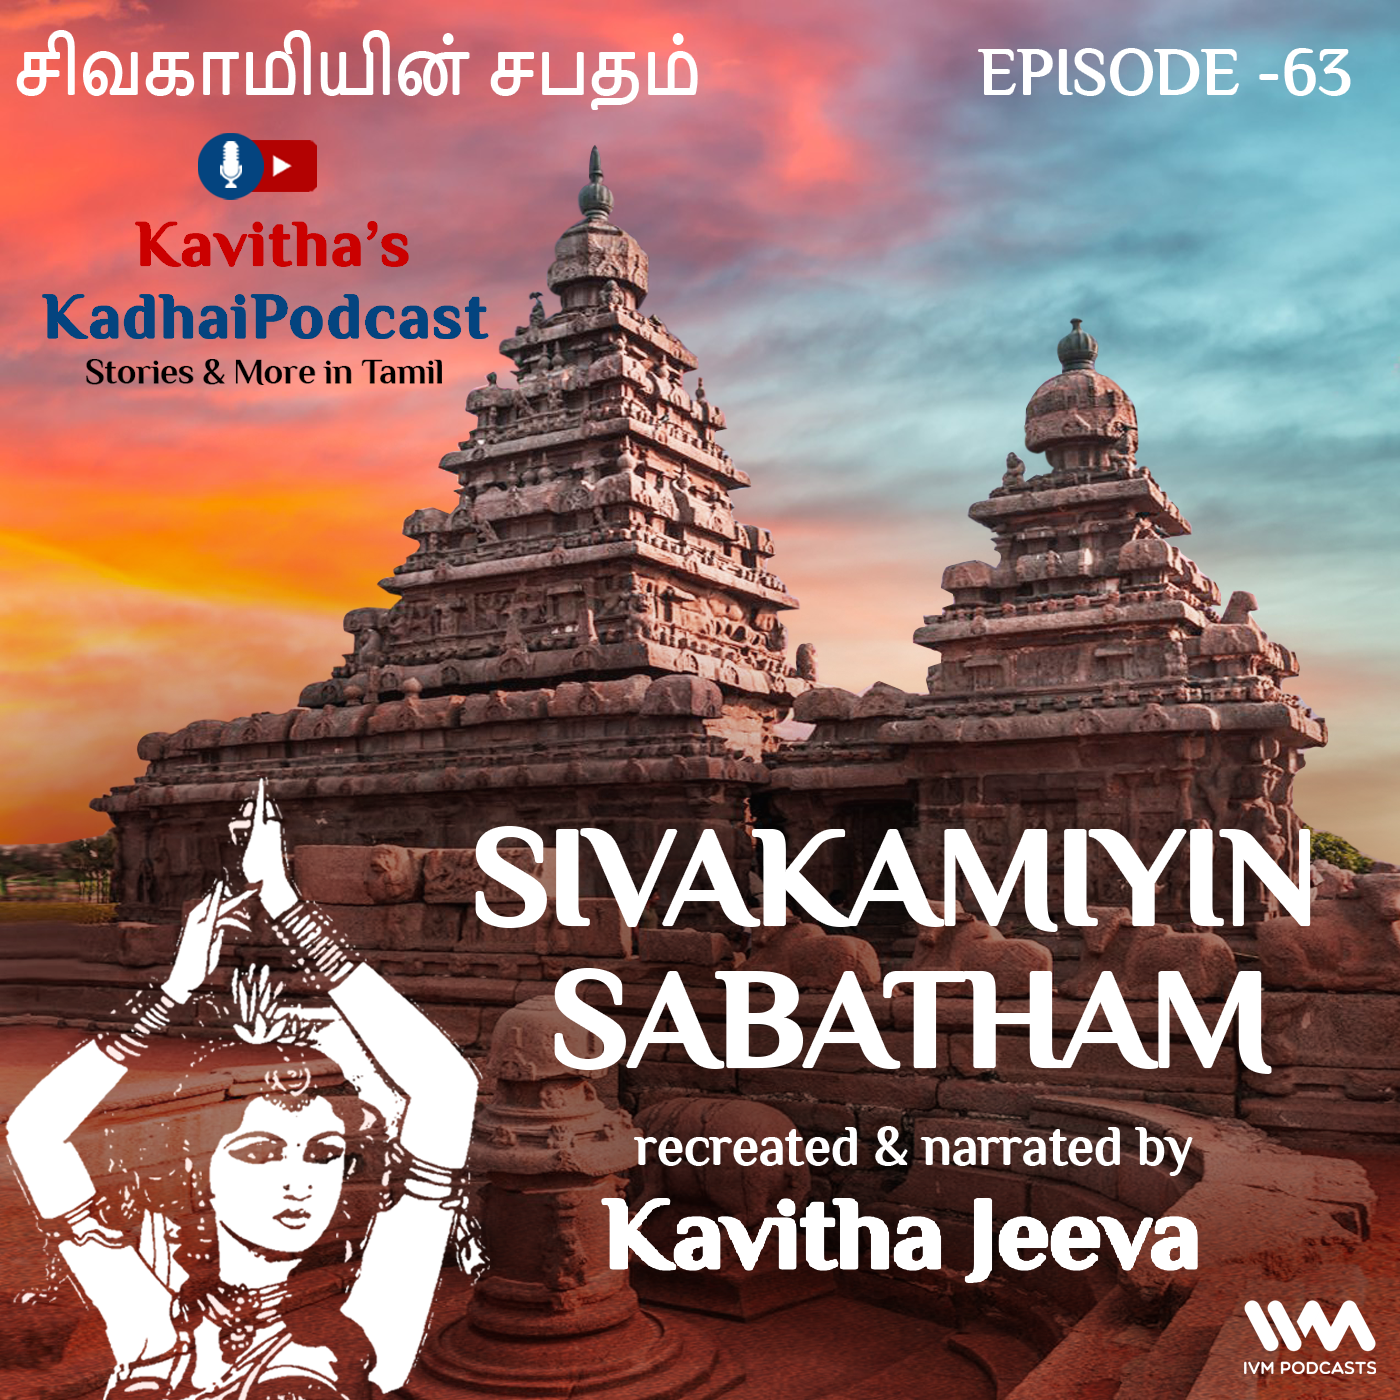 KadhaiPodcast’s Sivakamiyin Sabatham - Episode # 63